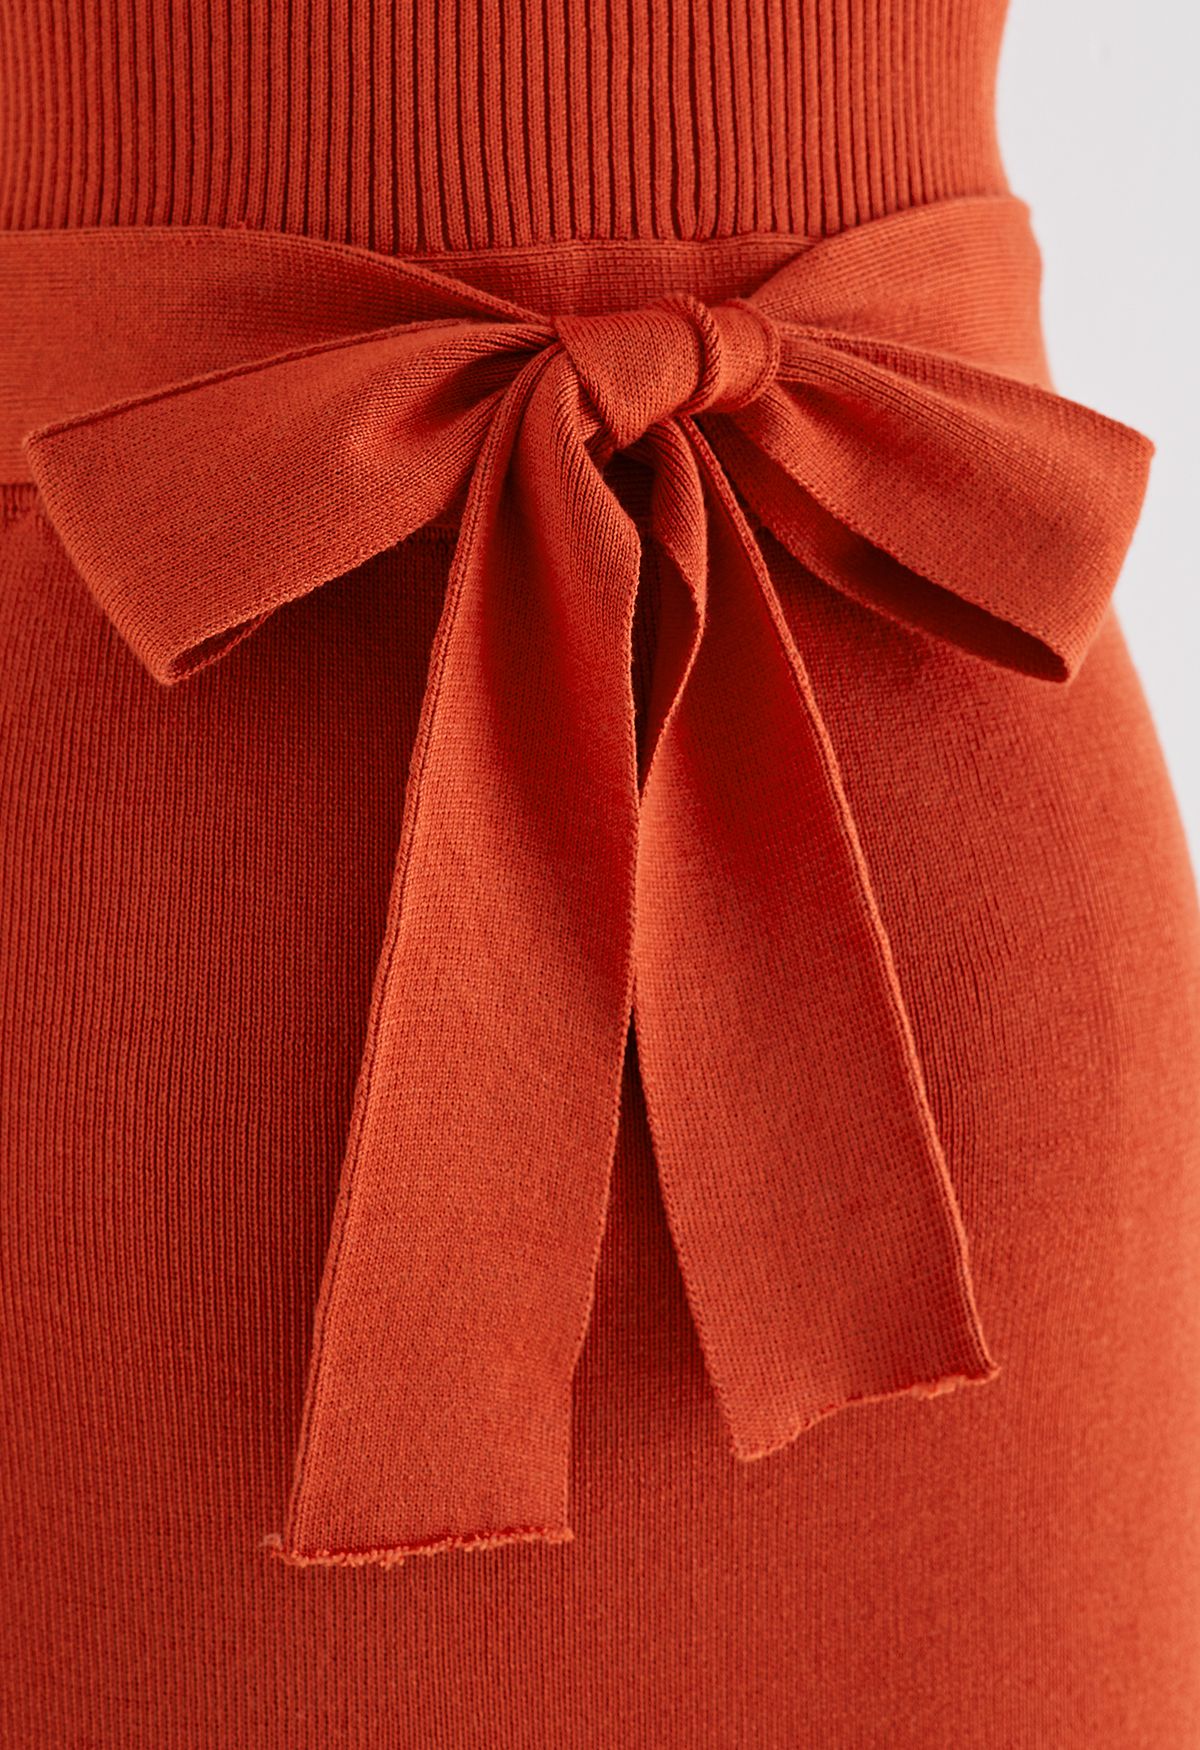 Tie Waist Knit Tank Top in Orange